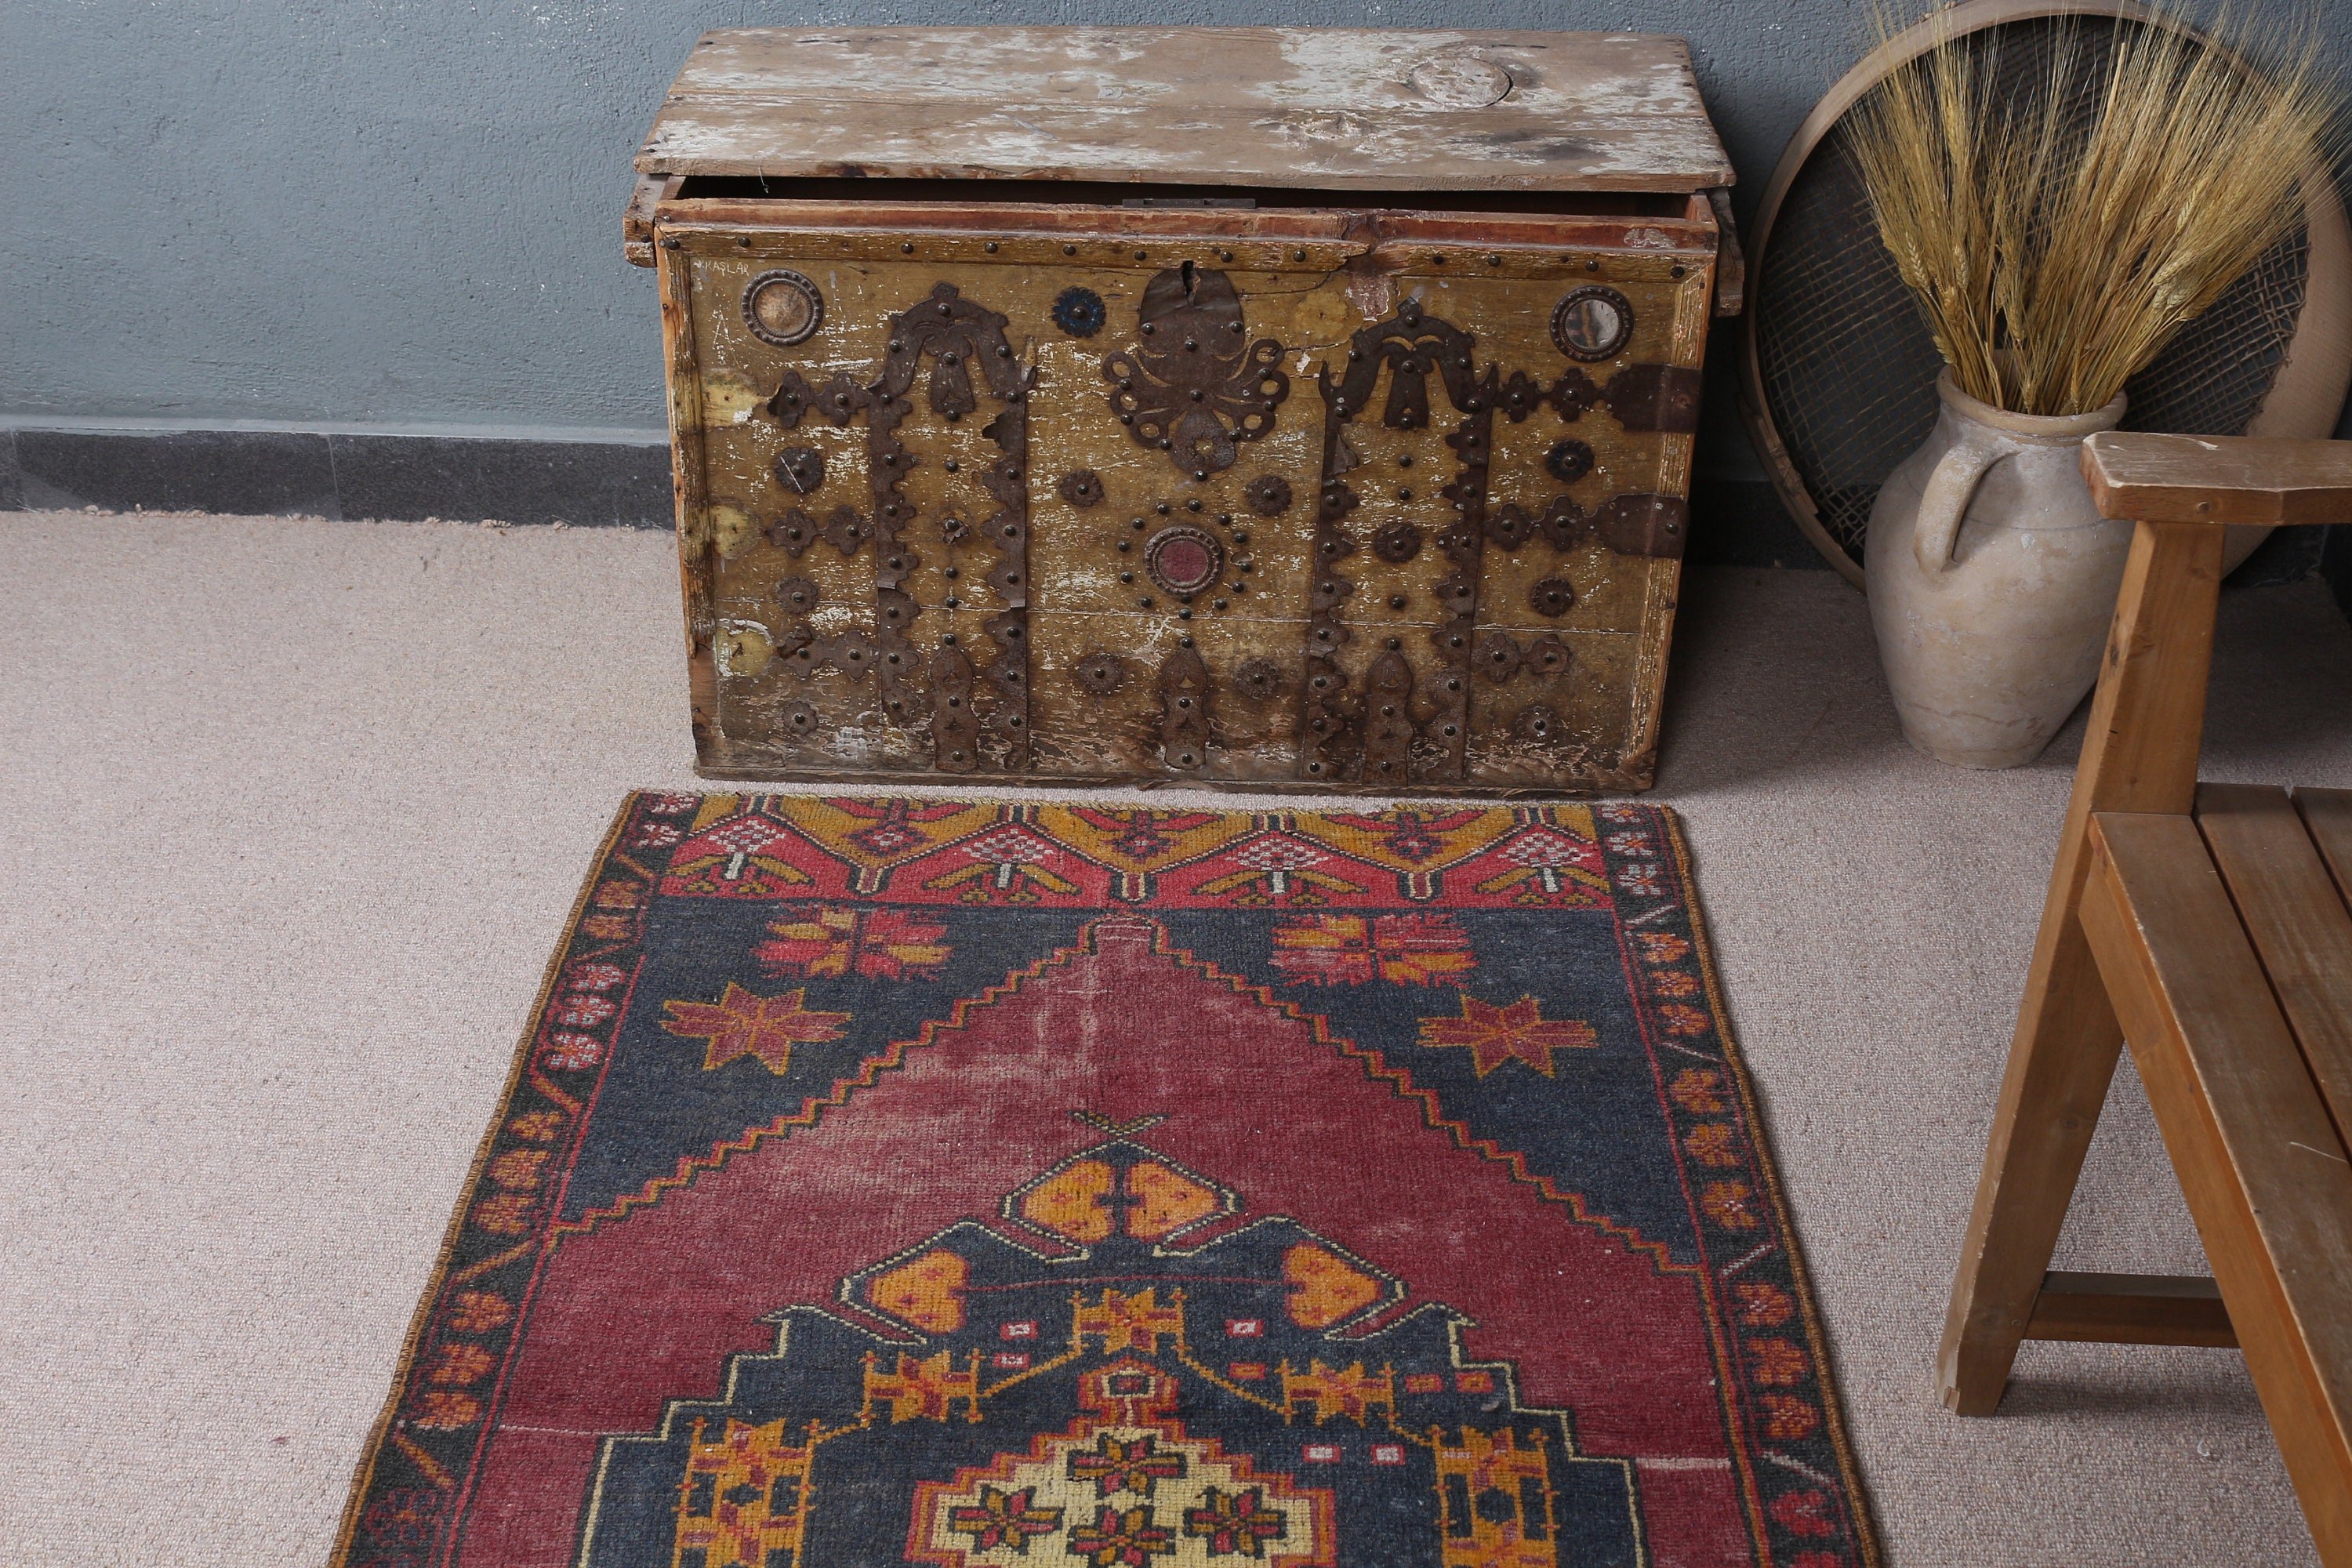 Moroccan Rugs, Bedroom Rug, 2.9x5 ft Small Rug, Purple Bedroom Rug, Rugs for Entry, Bathroom Rug, Entry Rug, Turkish Rug, Vintage Rug